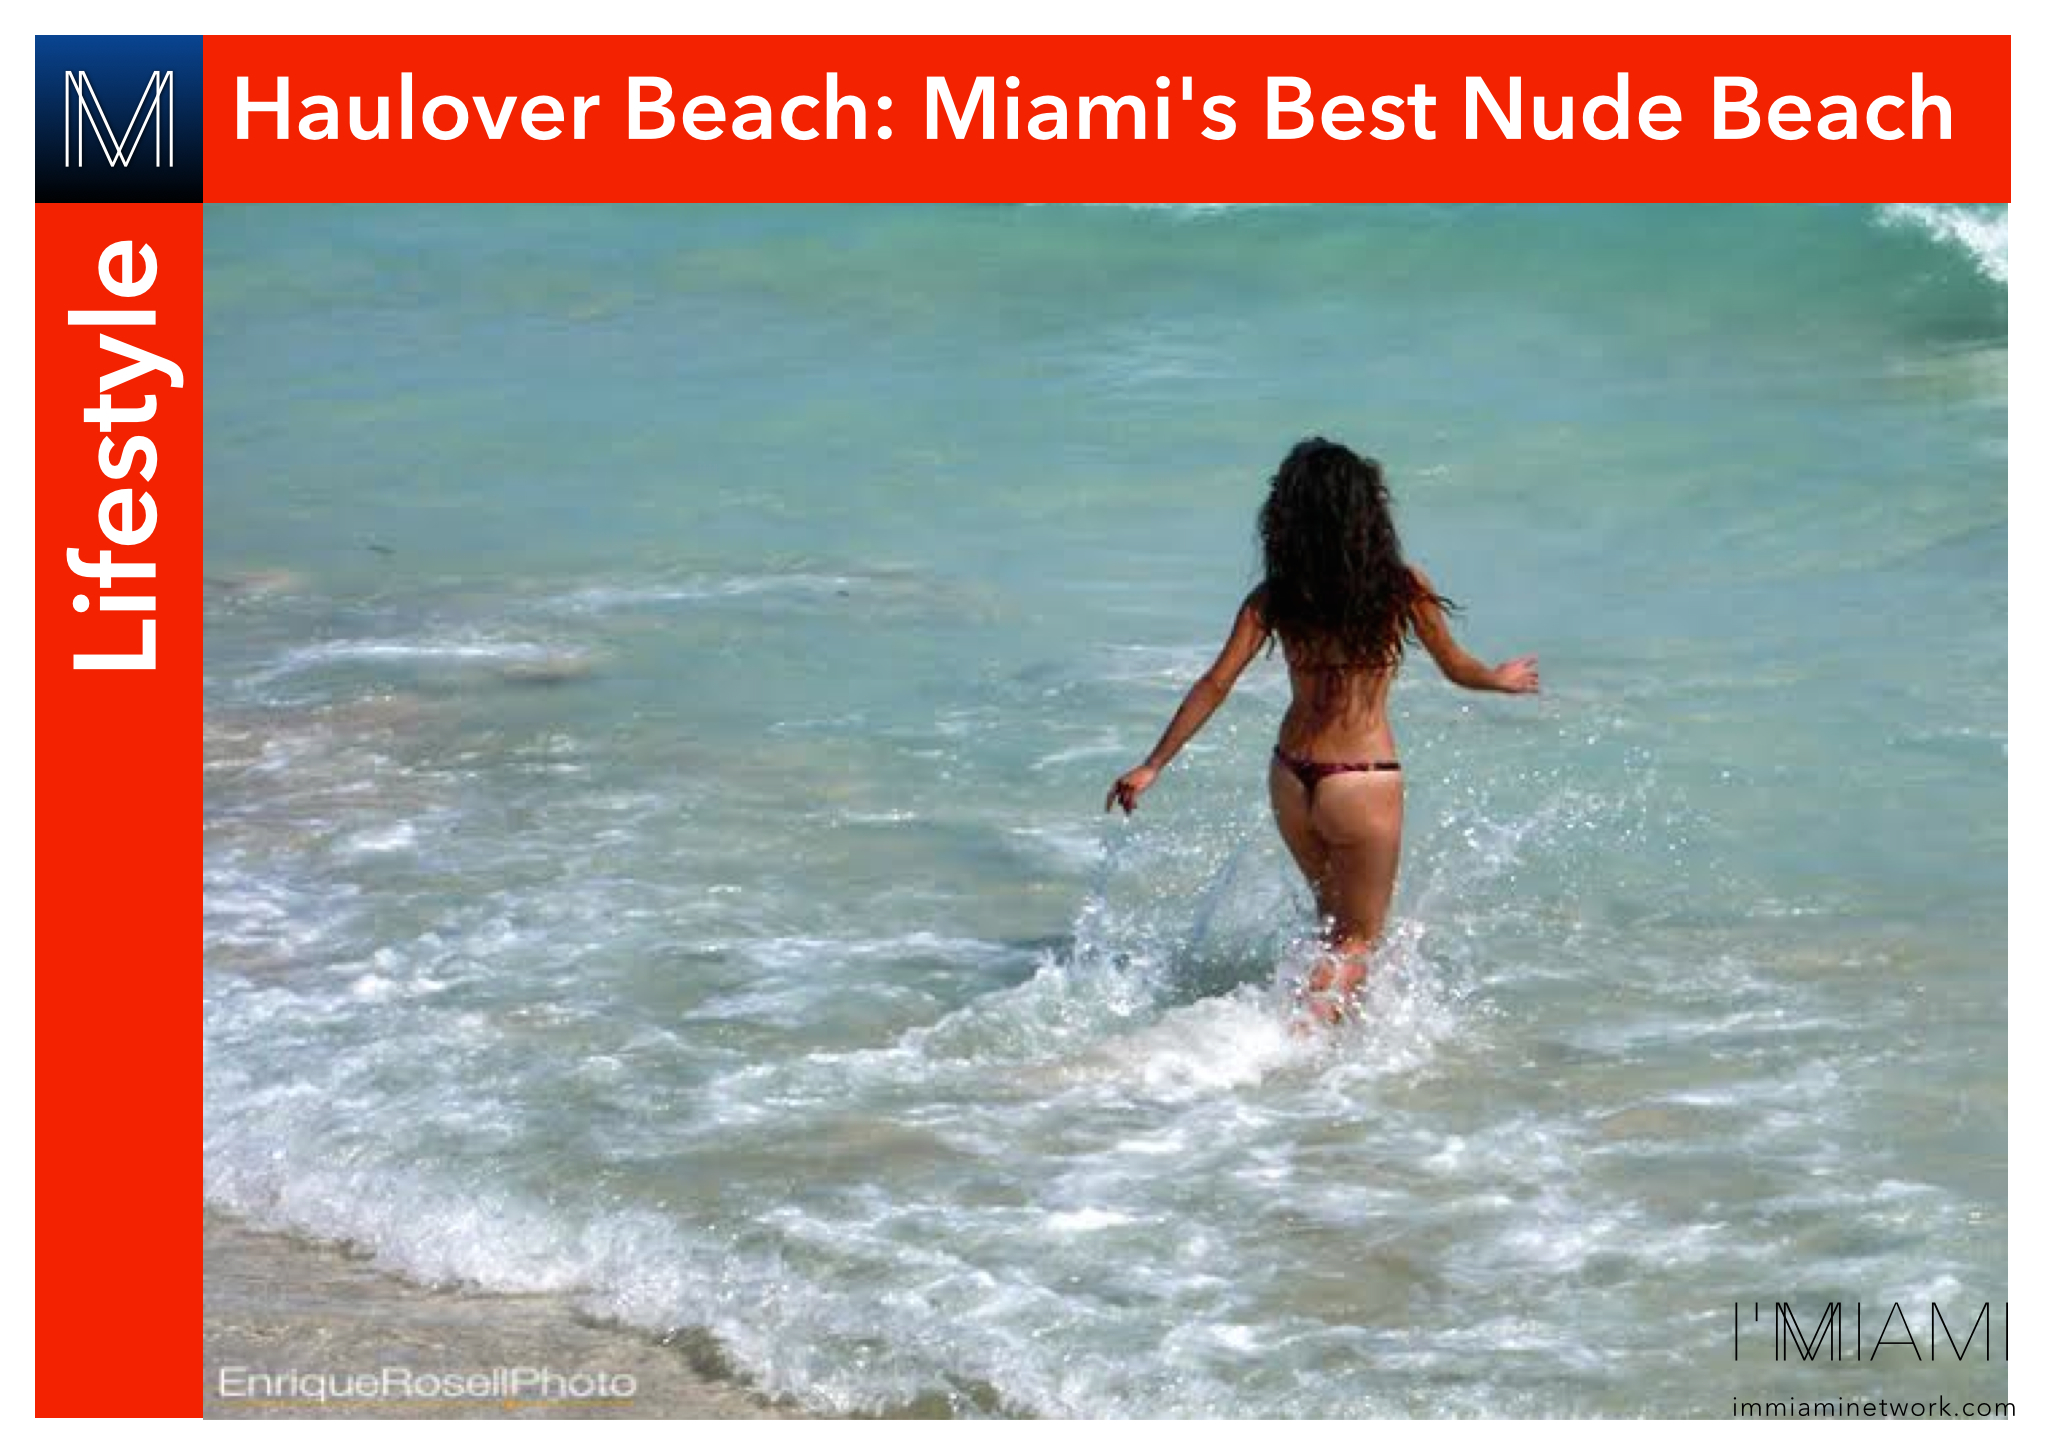 colin mcelwee share haulover nudist beach miami photos